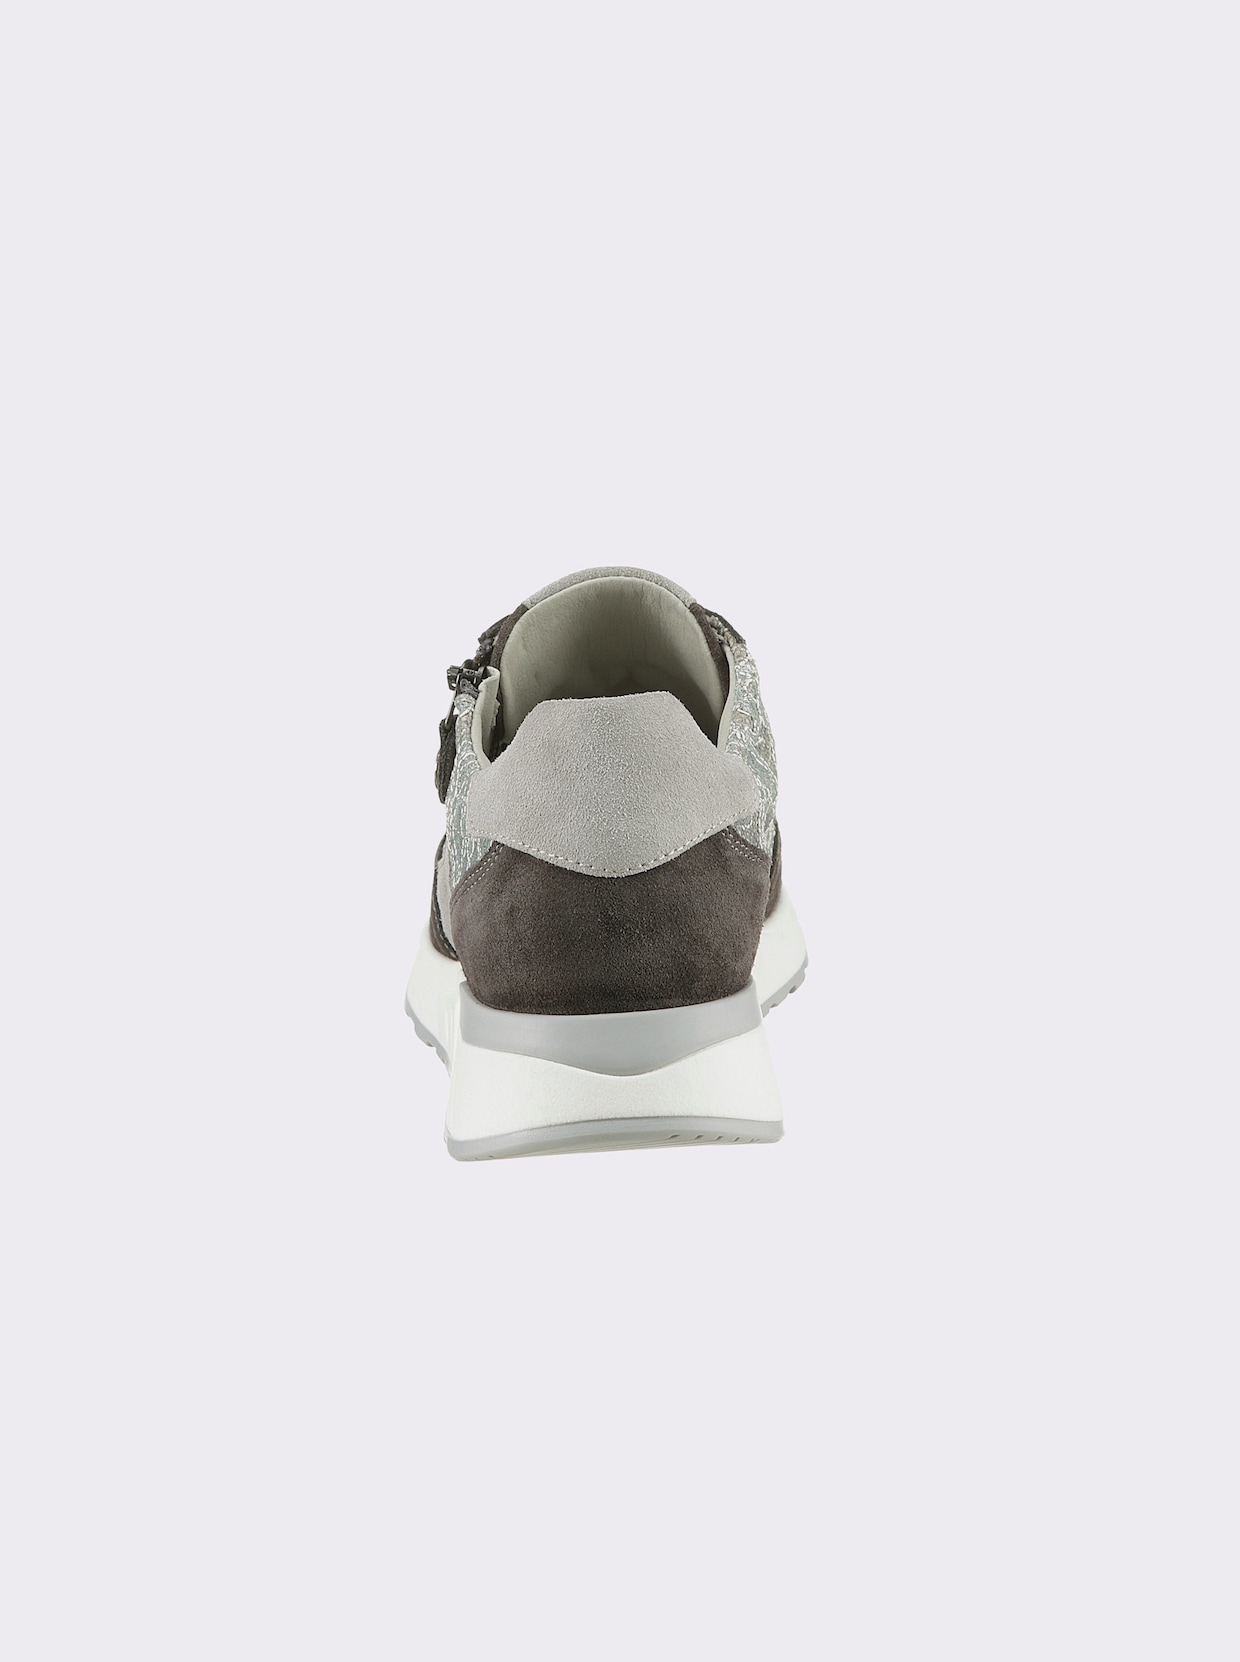 heine Sneaker - grau